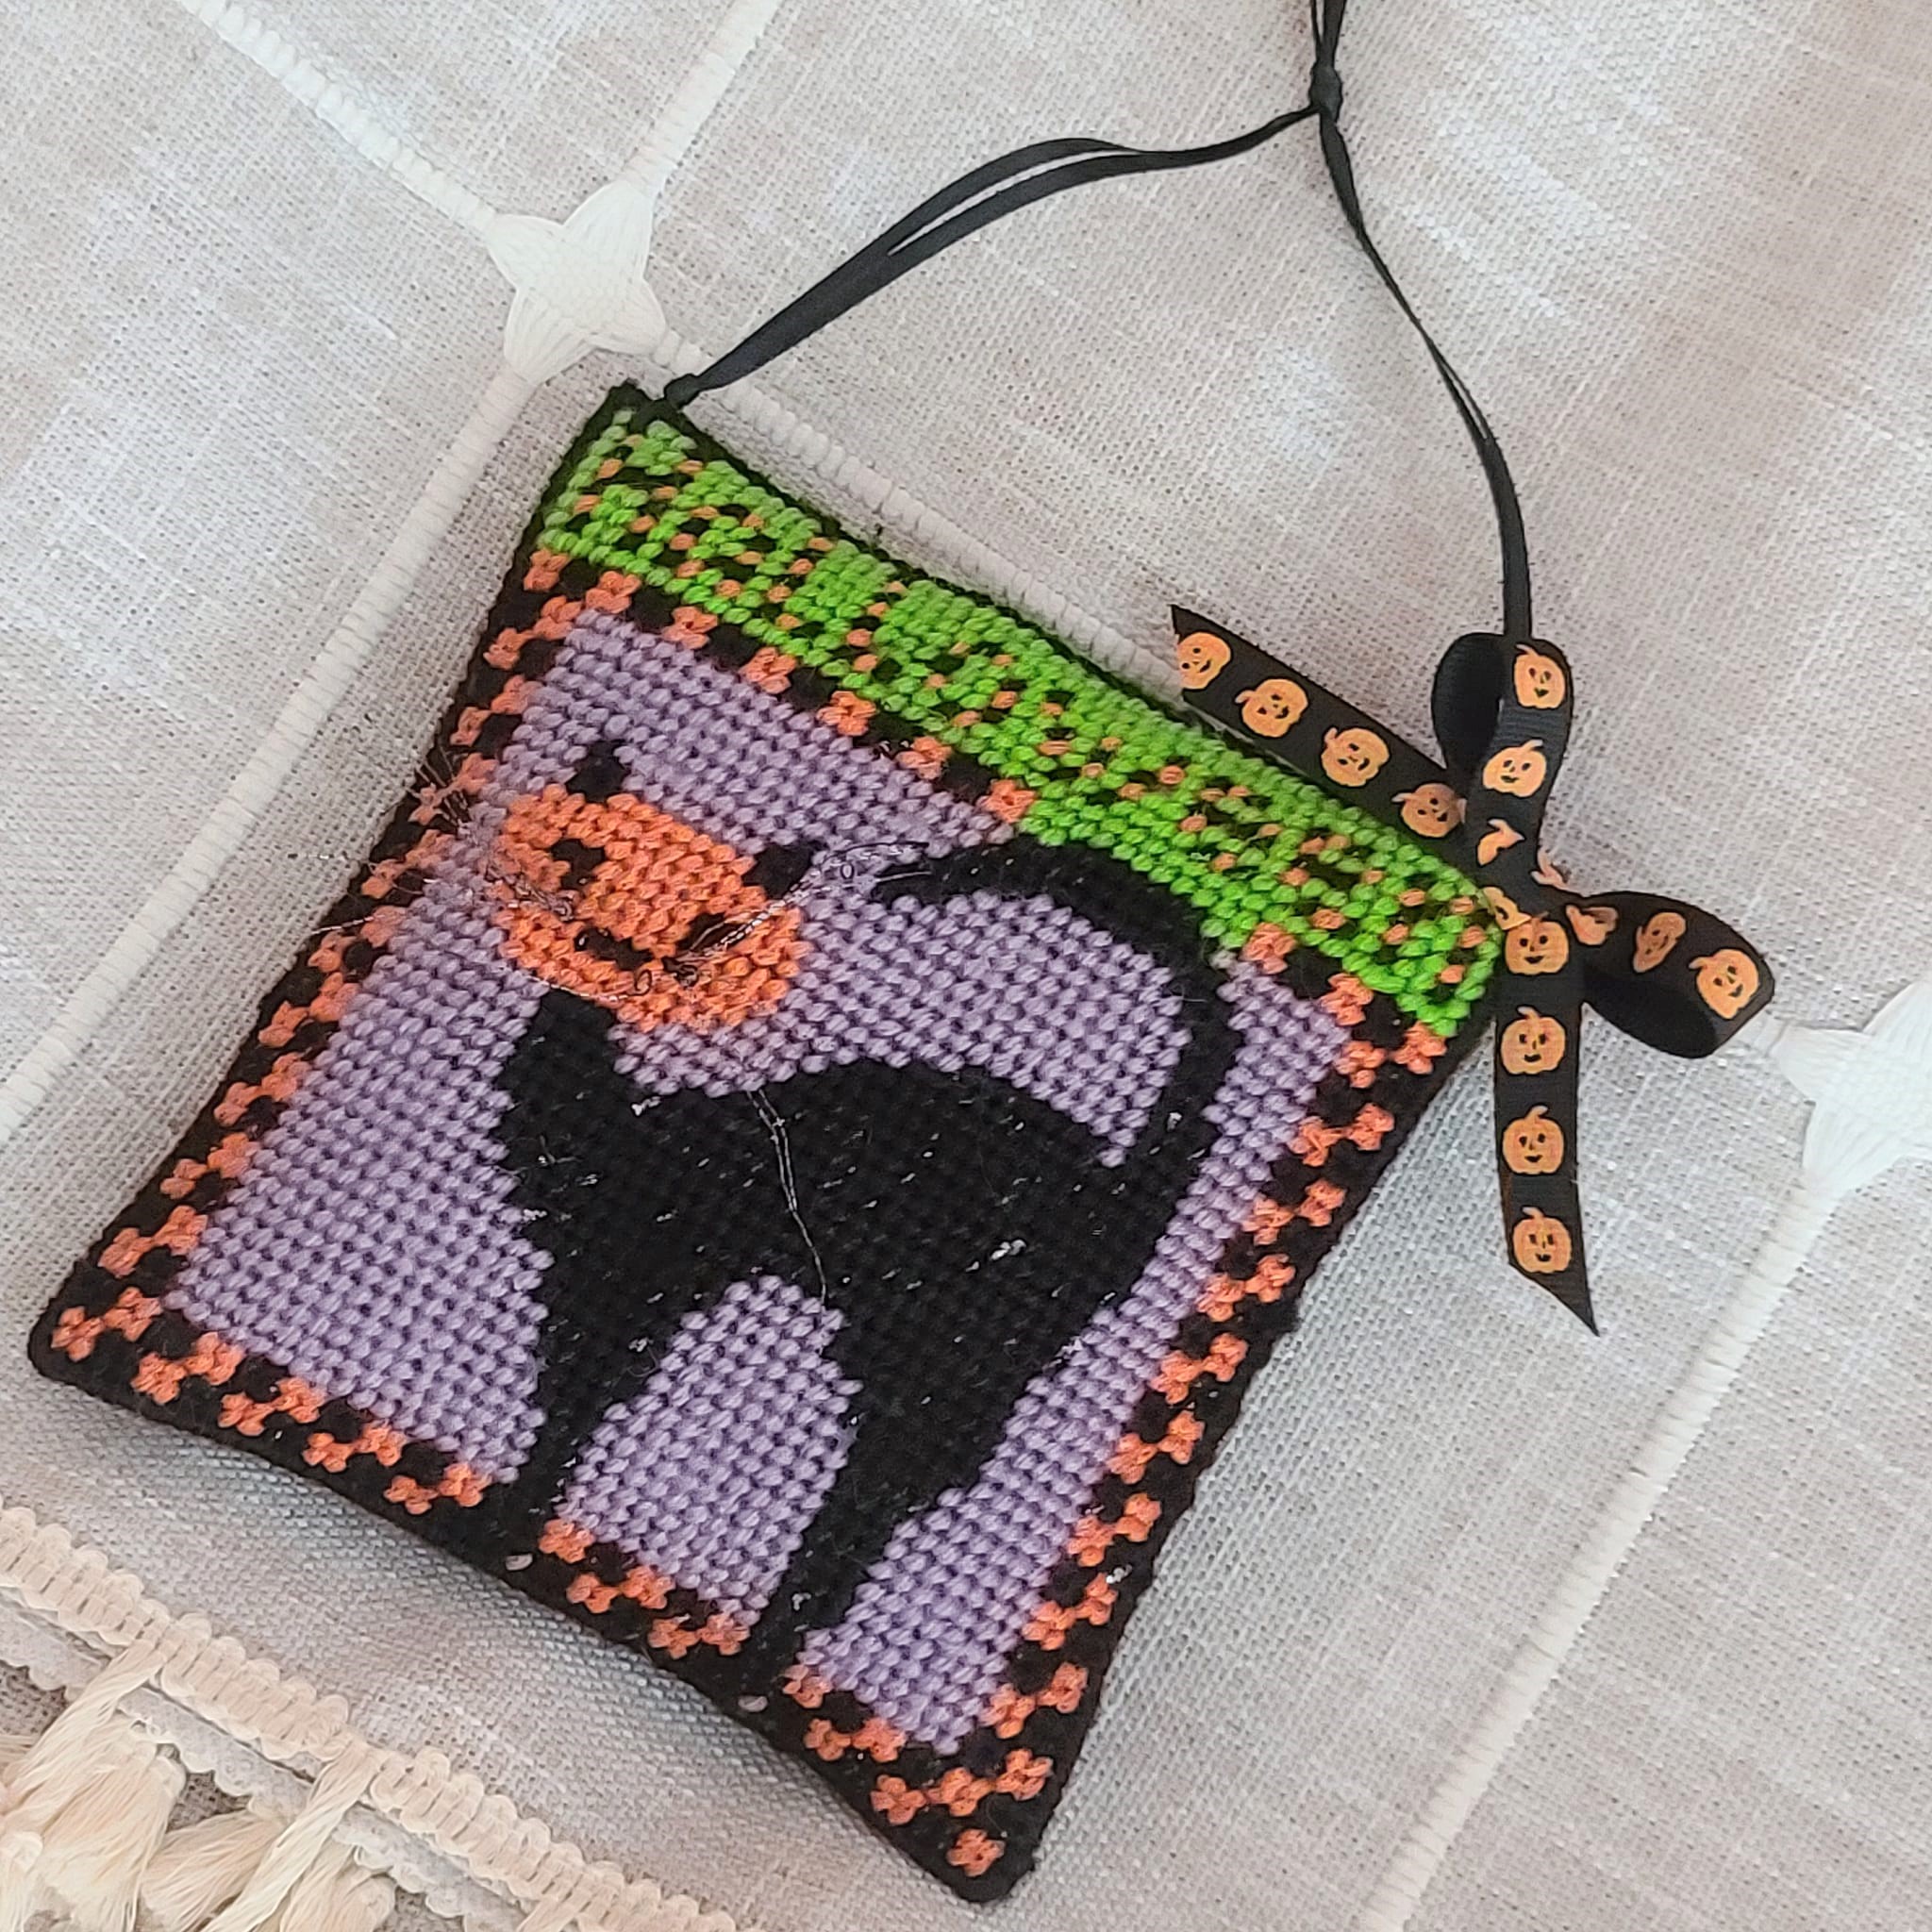 Halloween needlepoint black cat ornamental hanger